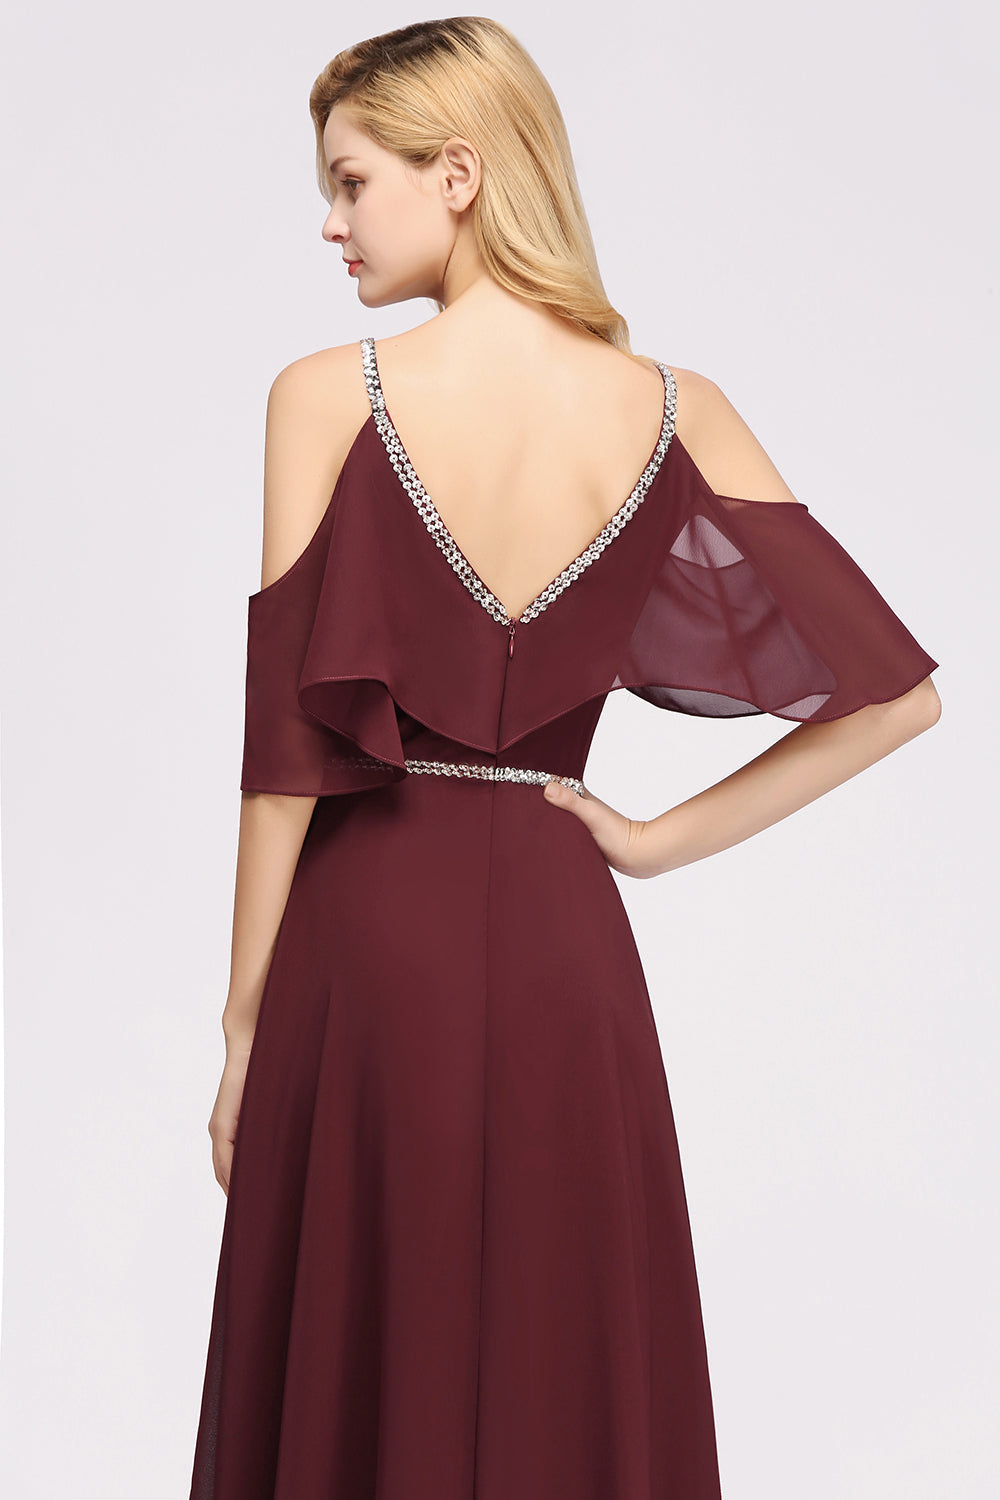 Burgundy Cold-shoulder Long Bridesmaid Dress With Half Sleeve